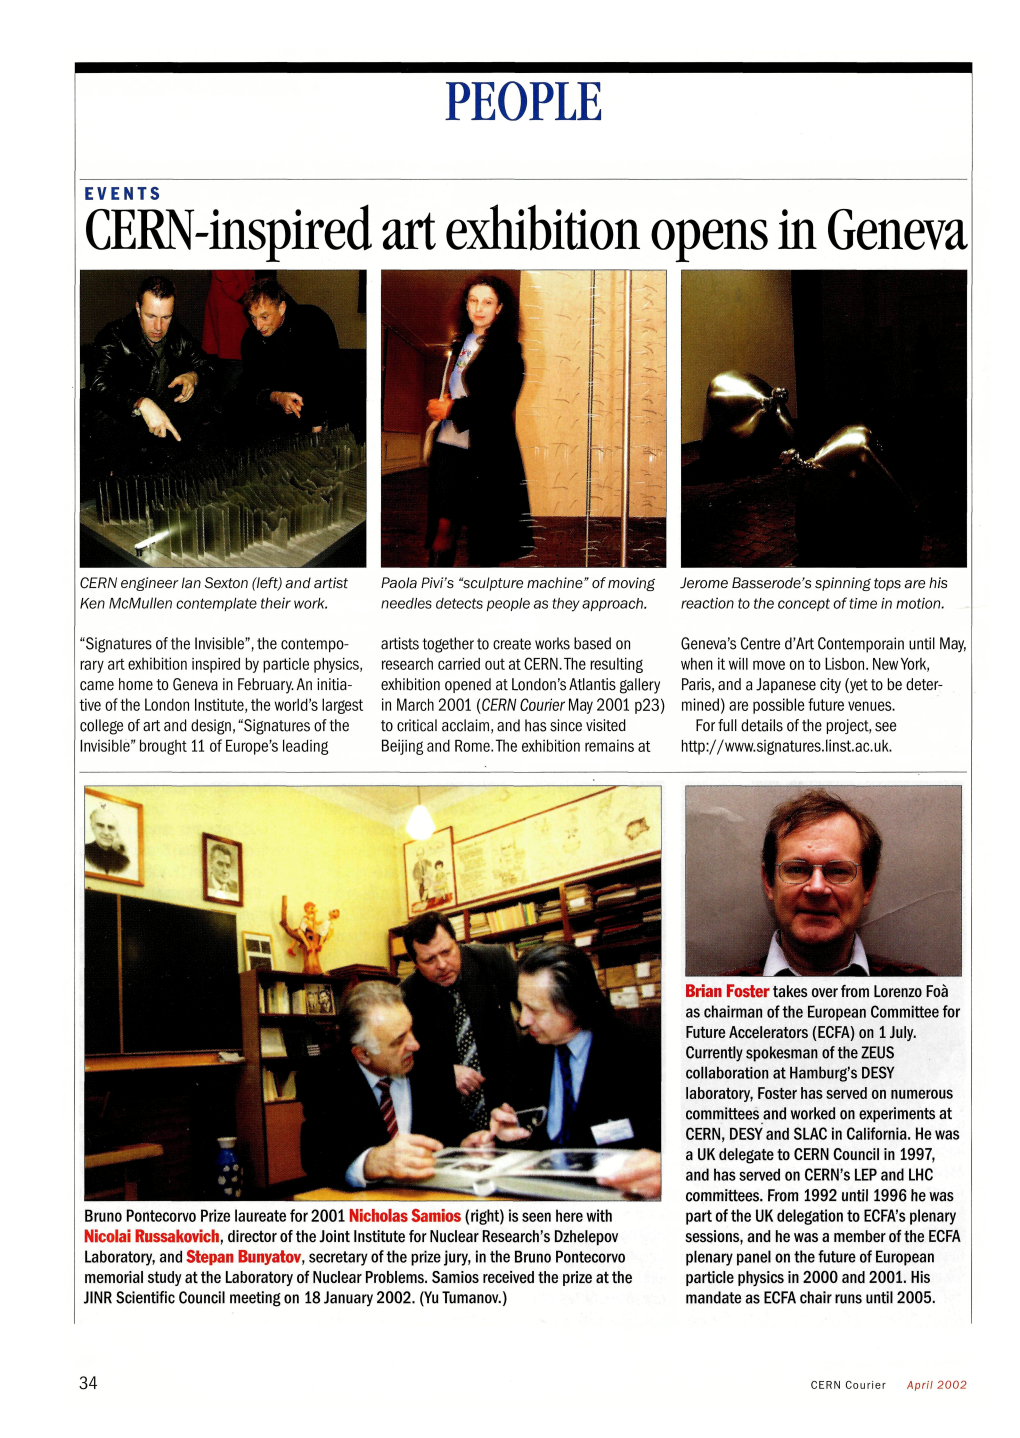 PEOPLE CERN-Inspired Art Exhibition Opens in Geneva